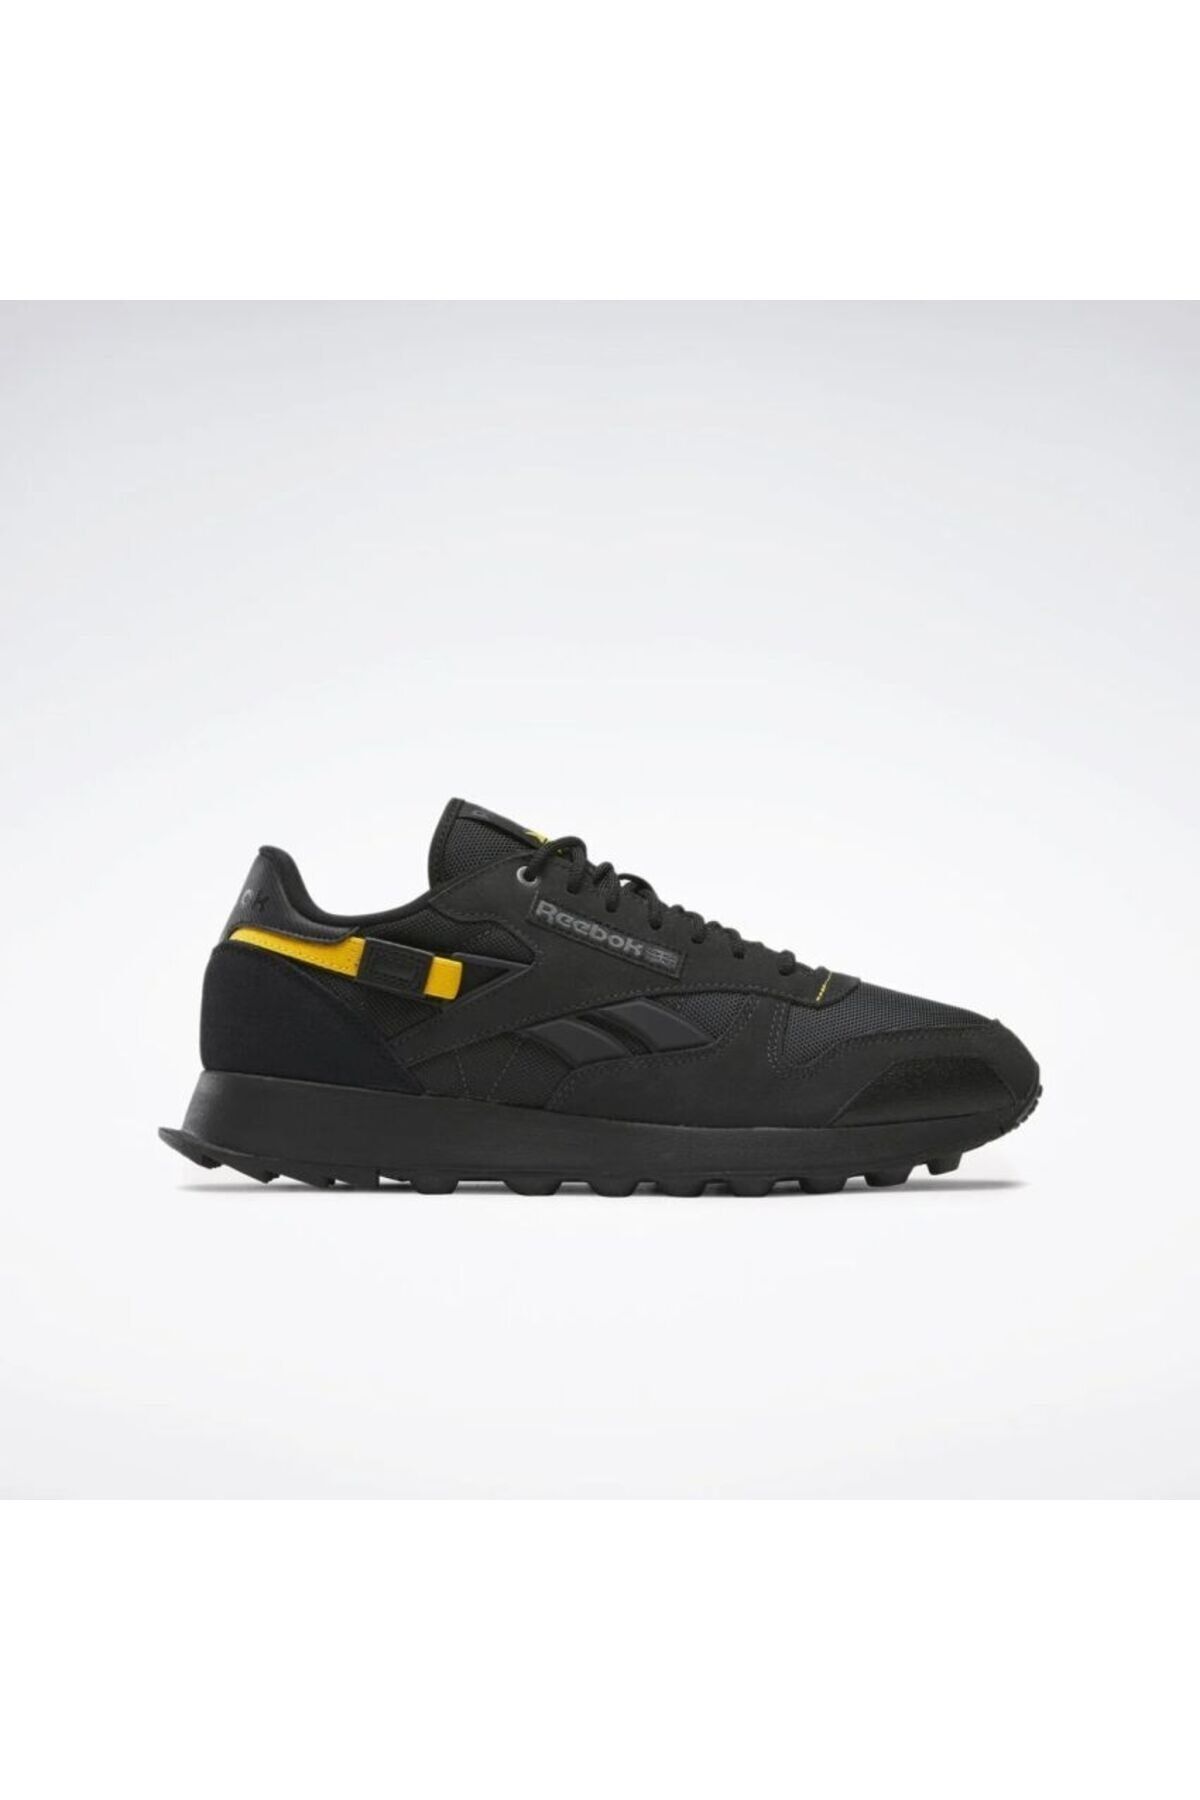 Reebok Classic Leather Siyah Unisex Sneaker Ayakkabı 100032804